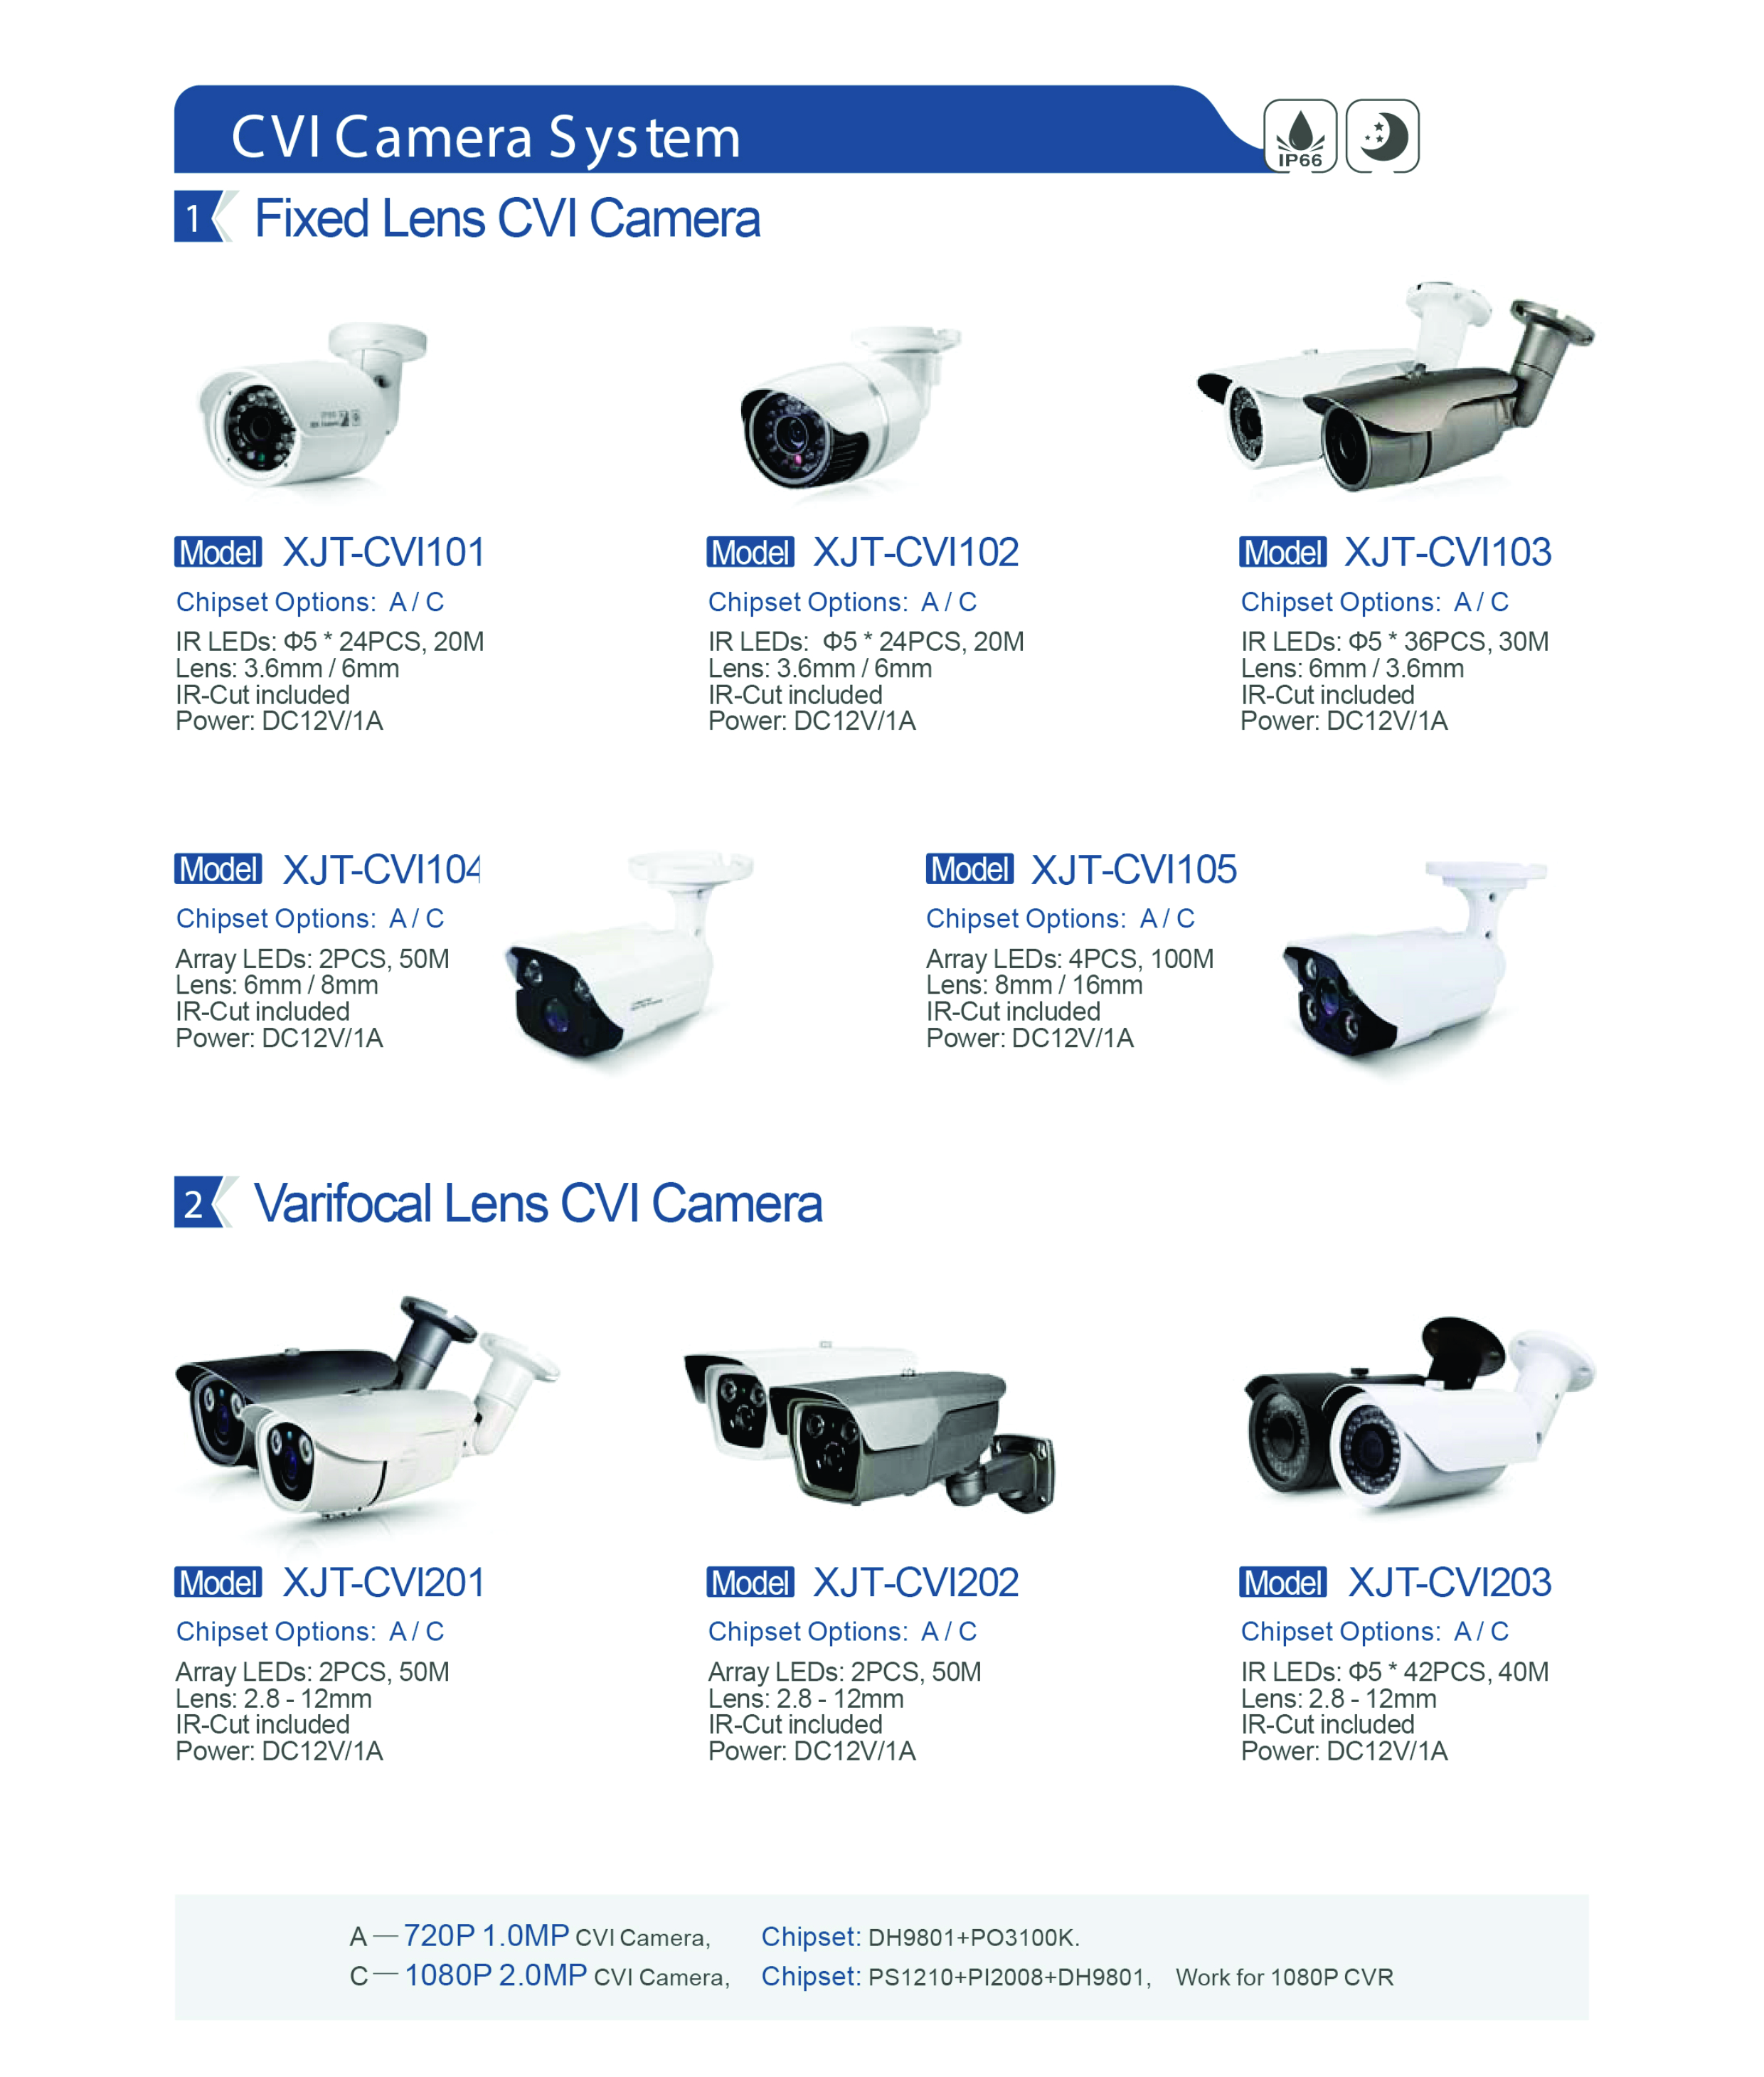 CVI Camera System